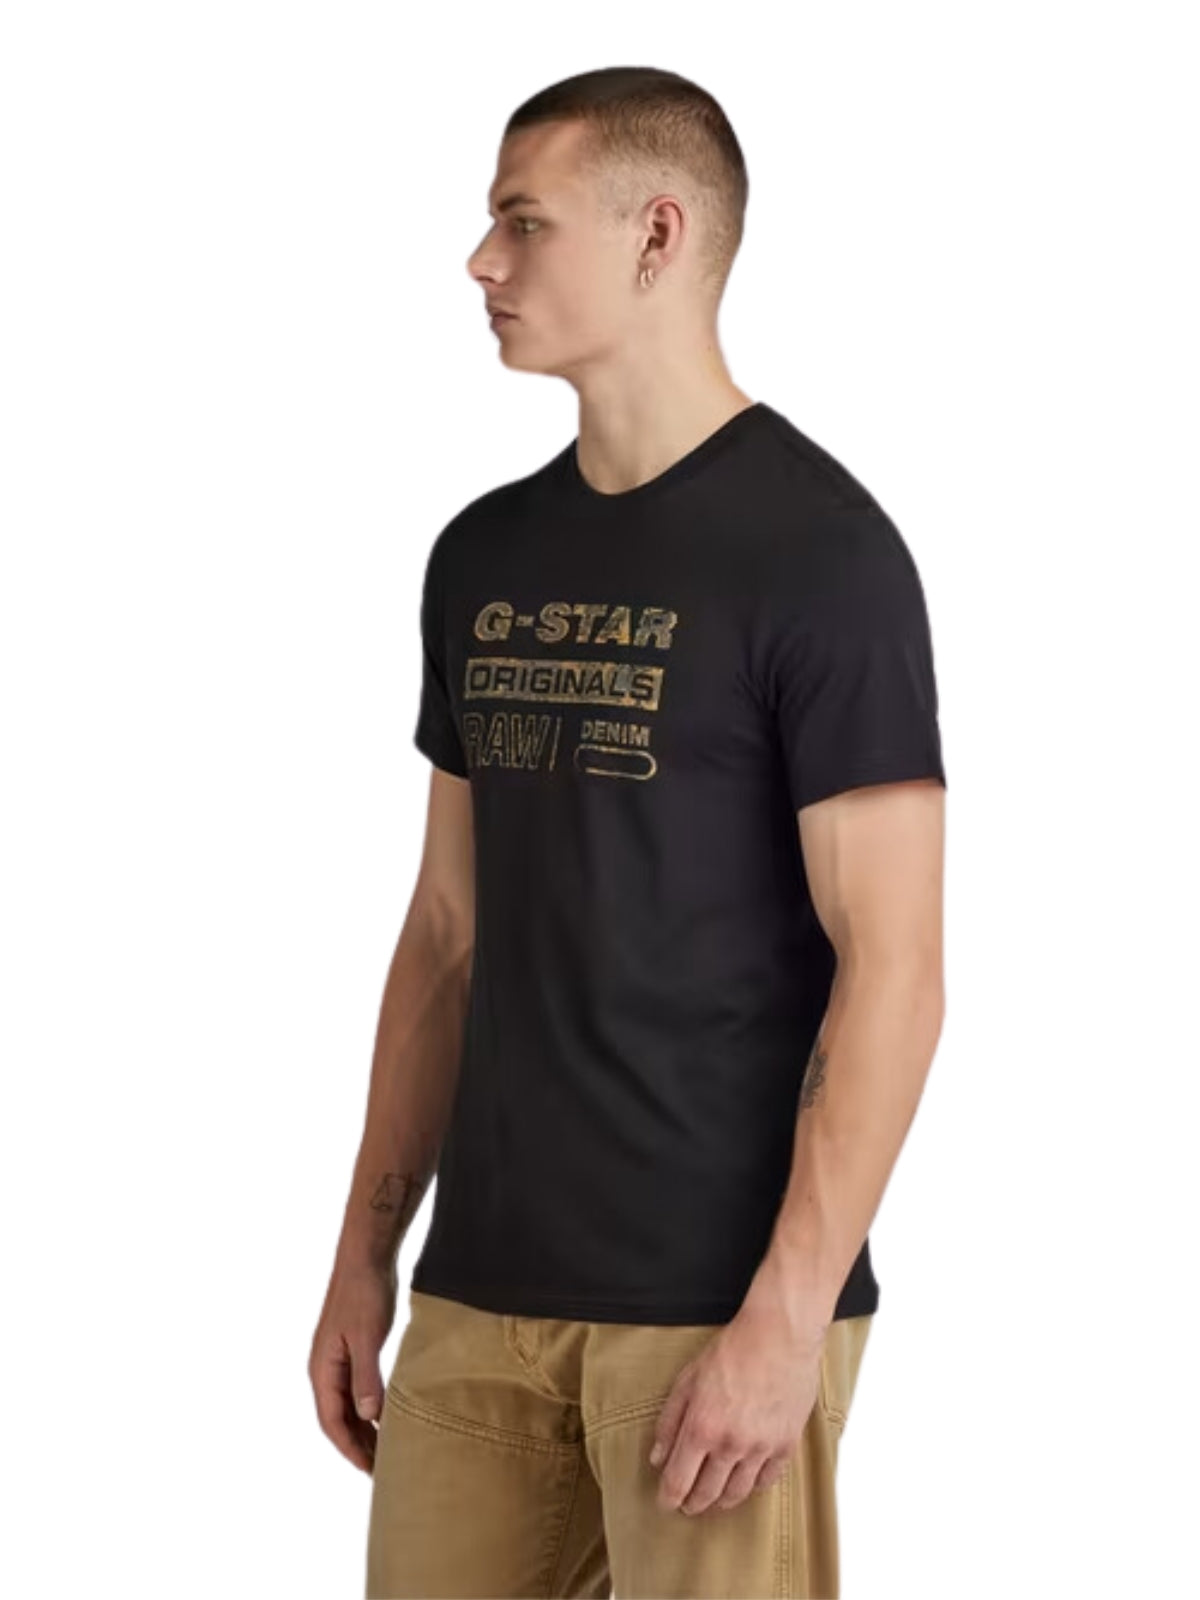 G-Star T-Shirt Distressed Original Slim Black